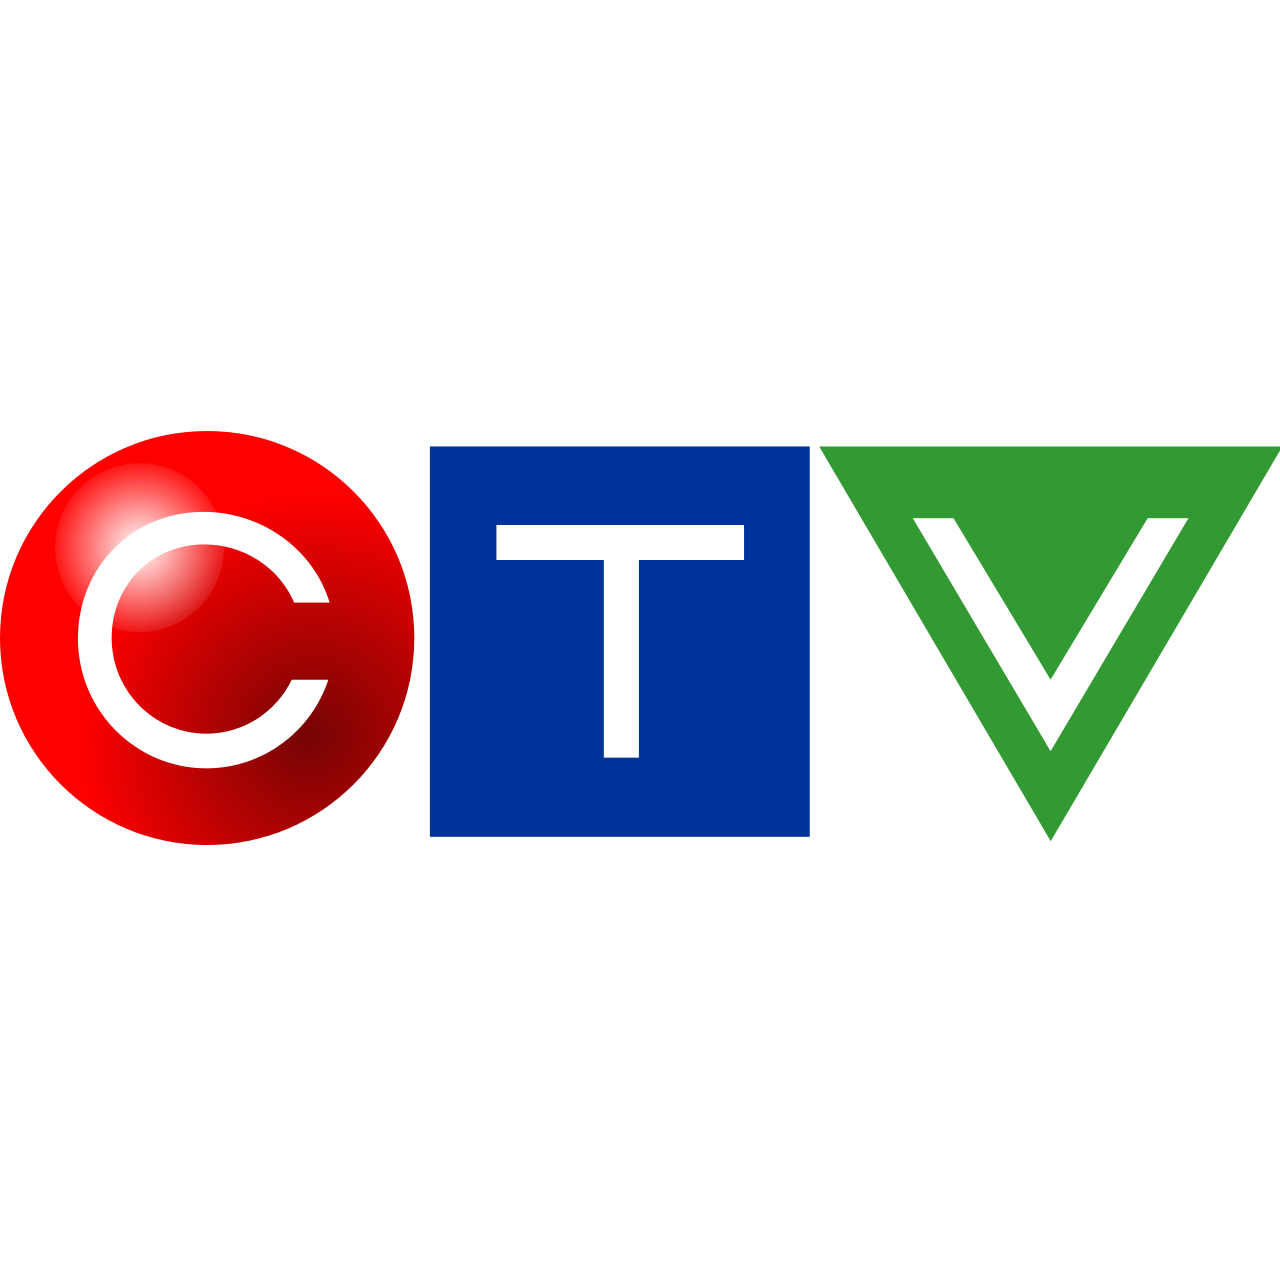 CTV Vancouver